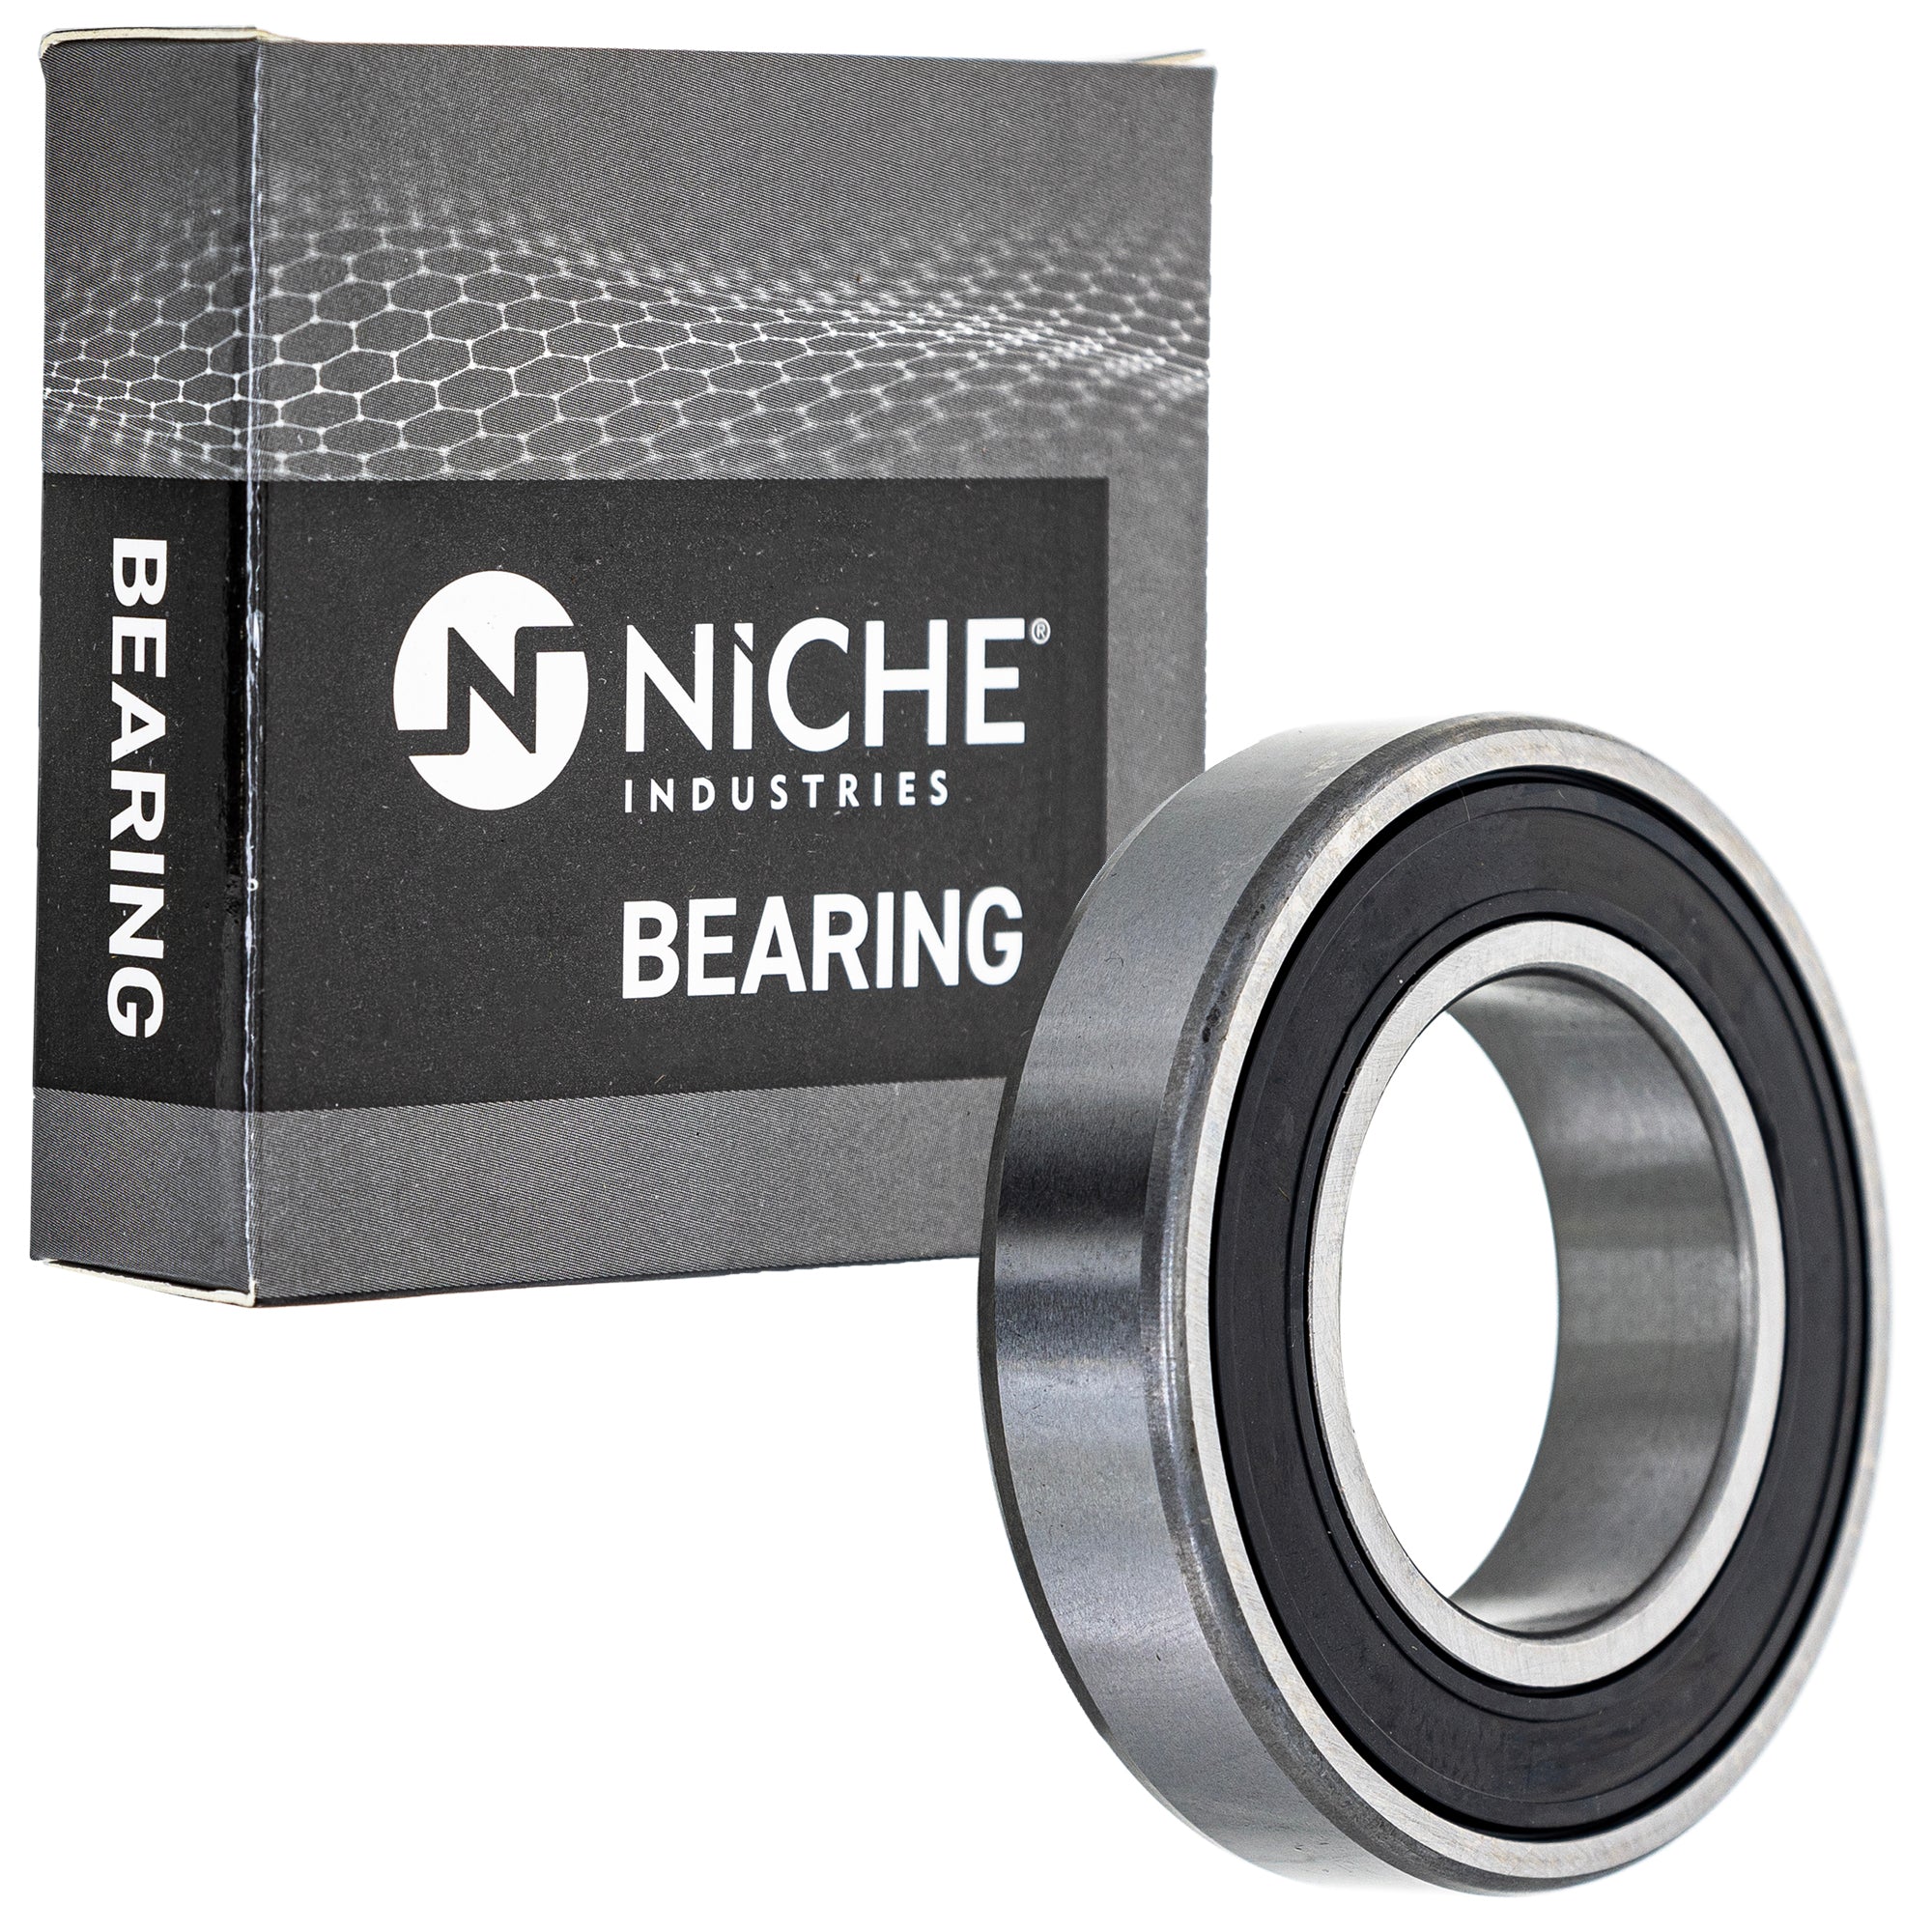 NICHE 519-CBB2336R Bearing 10-Pack for zOTHER TRX90X TRX250X Sportrax